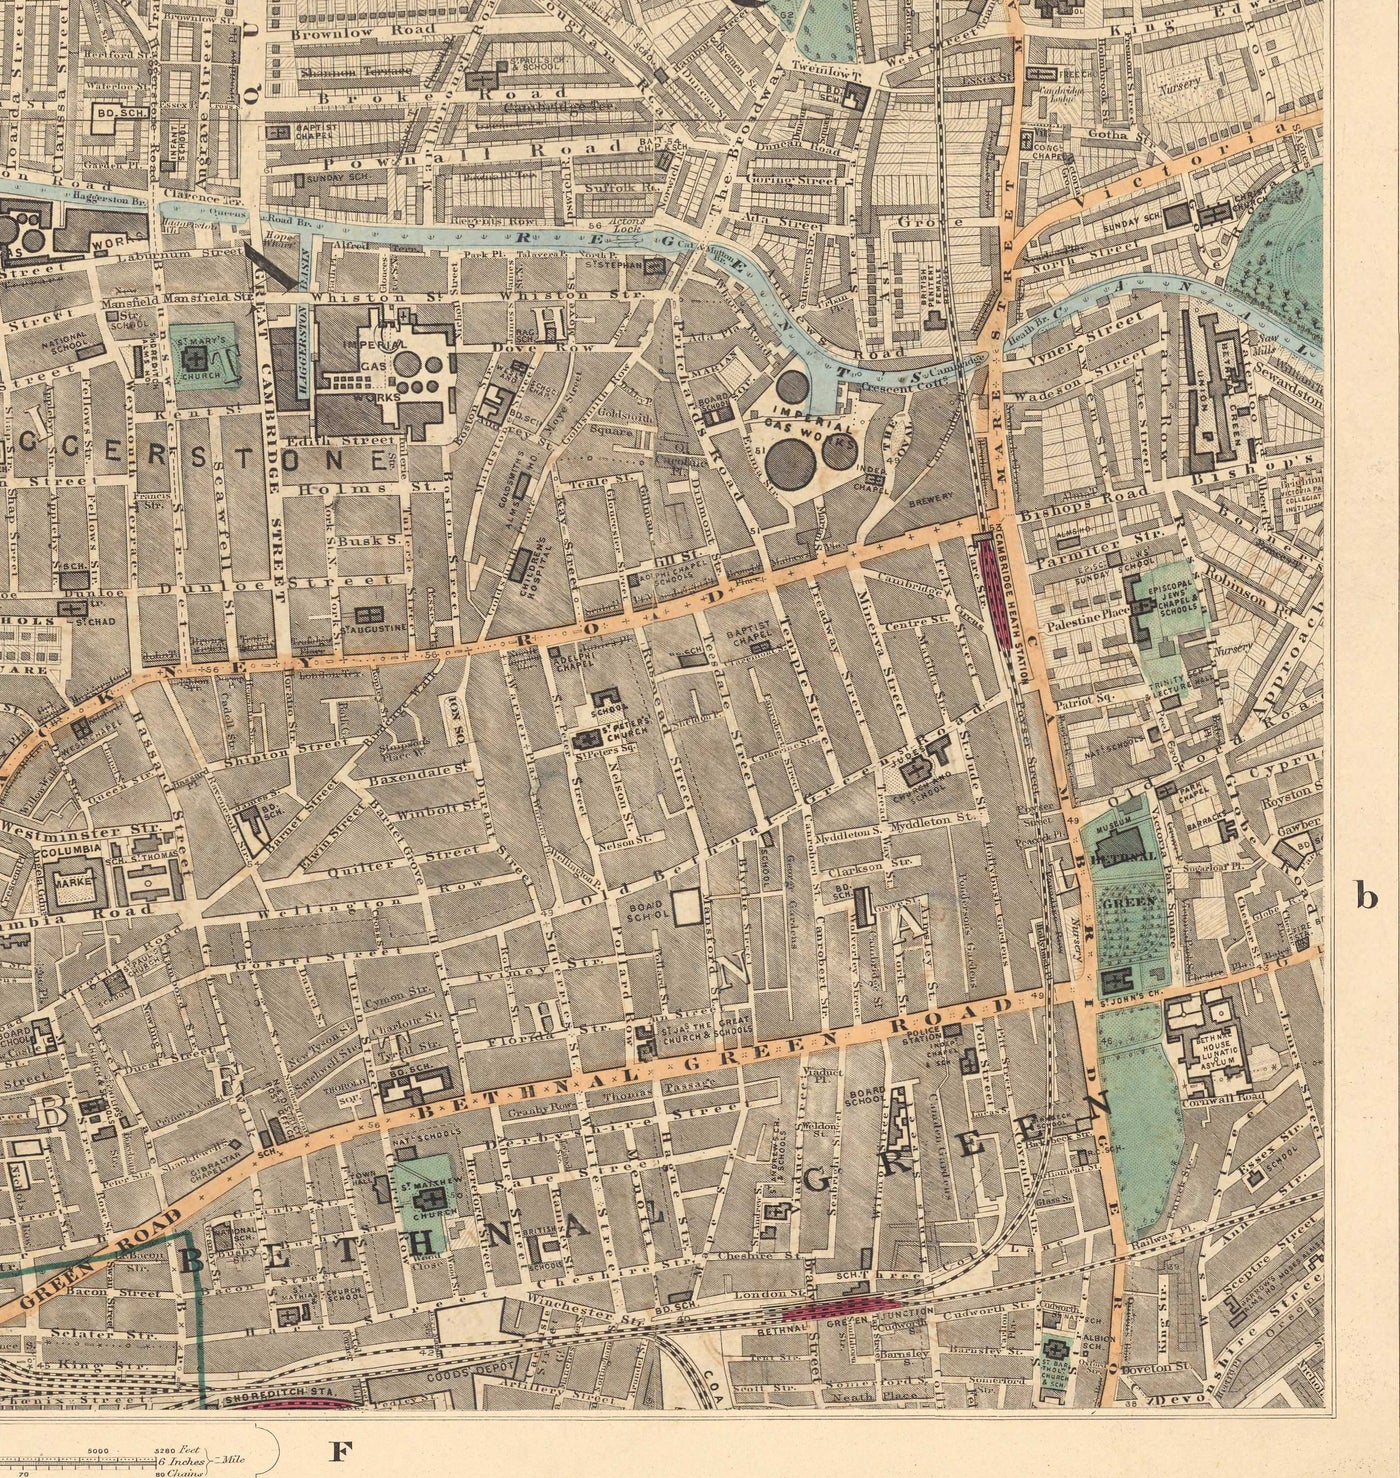 Alte Farbkarte von East London, 1891 - Hoxton, Haggerston, Dalston, Hackney, Bethnal Green - N1, N5, E8, E2, EC1